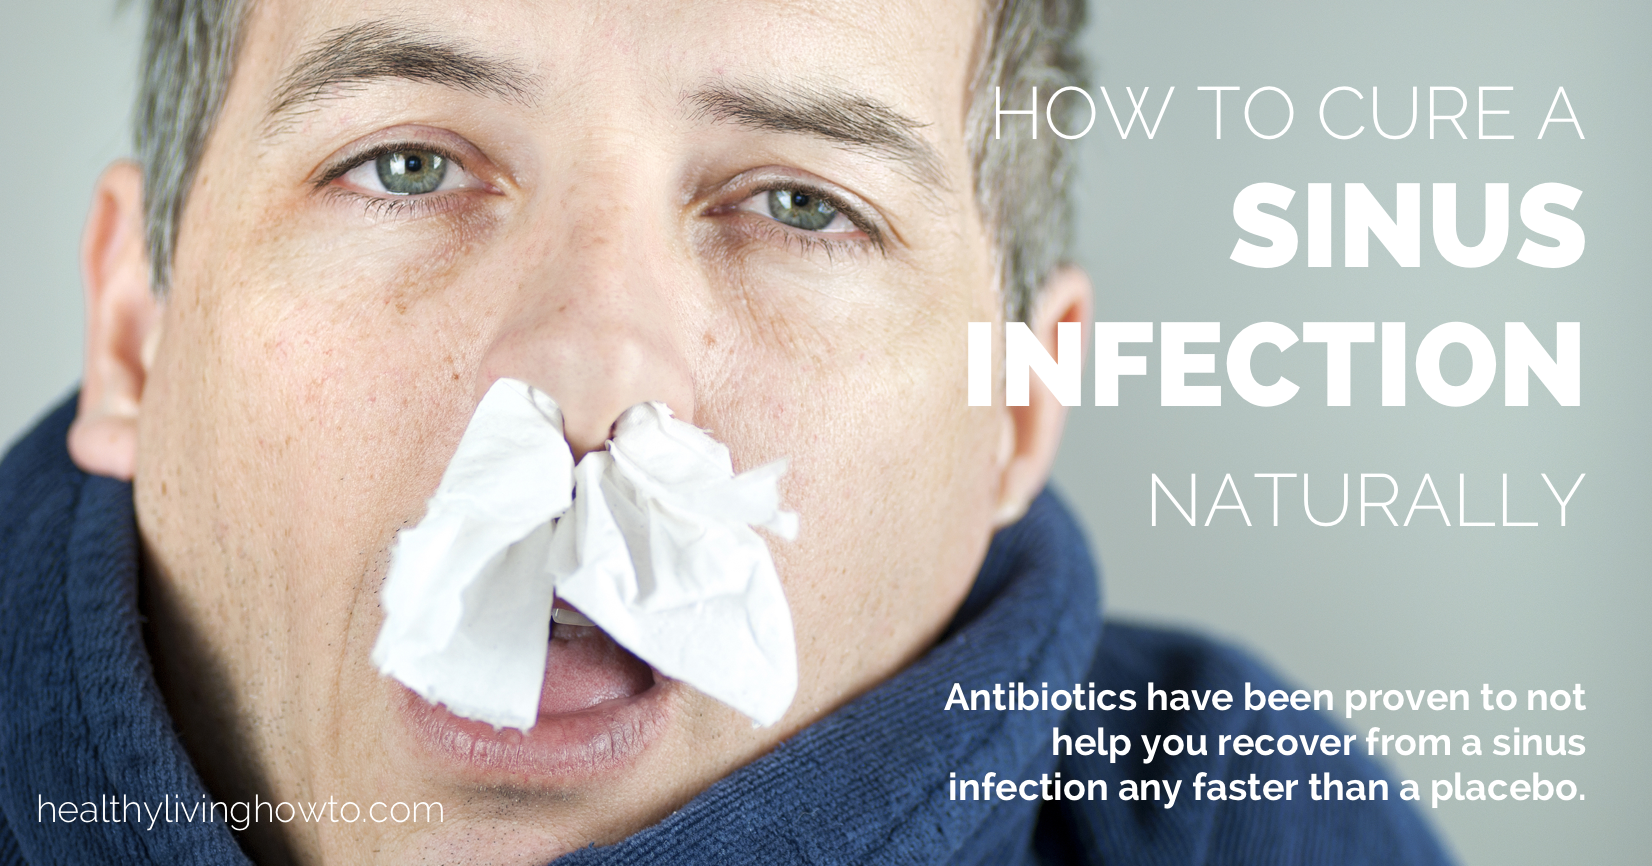 will antibiotics help my sinus infection